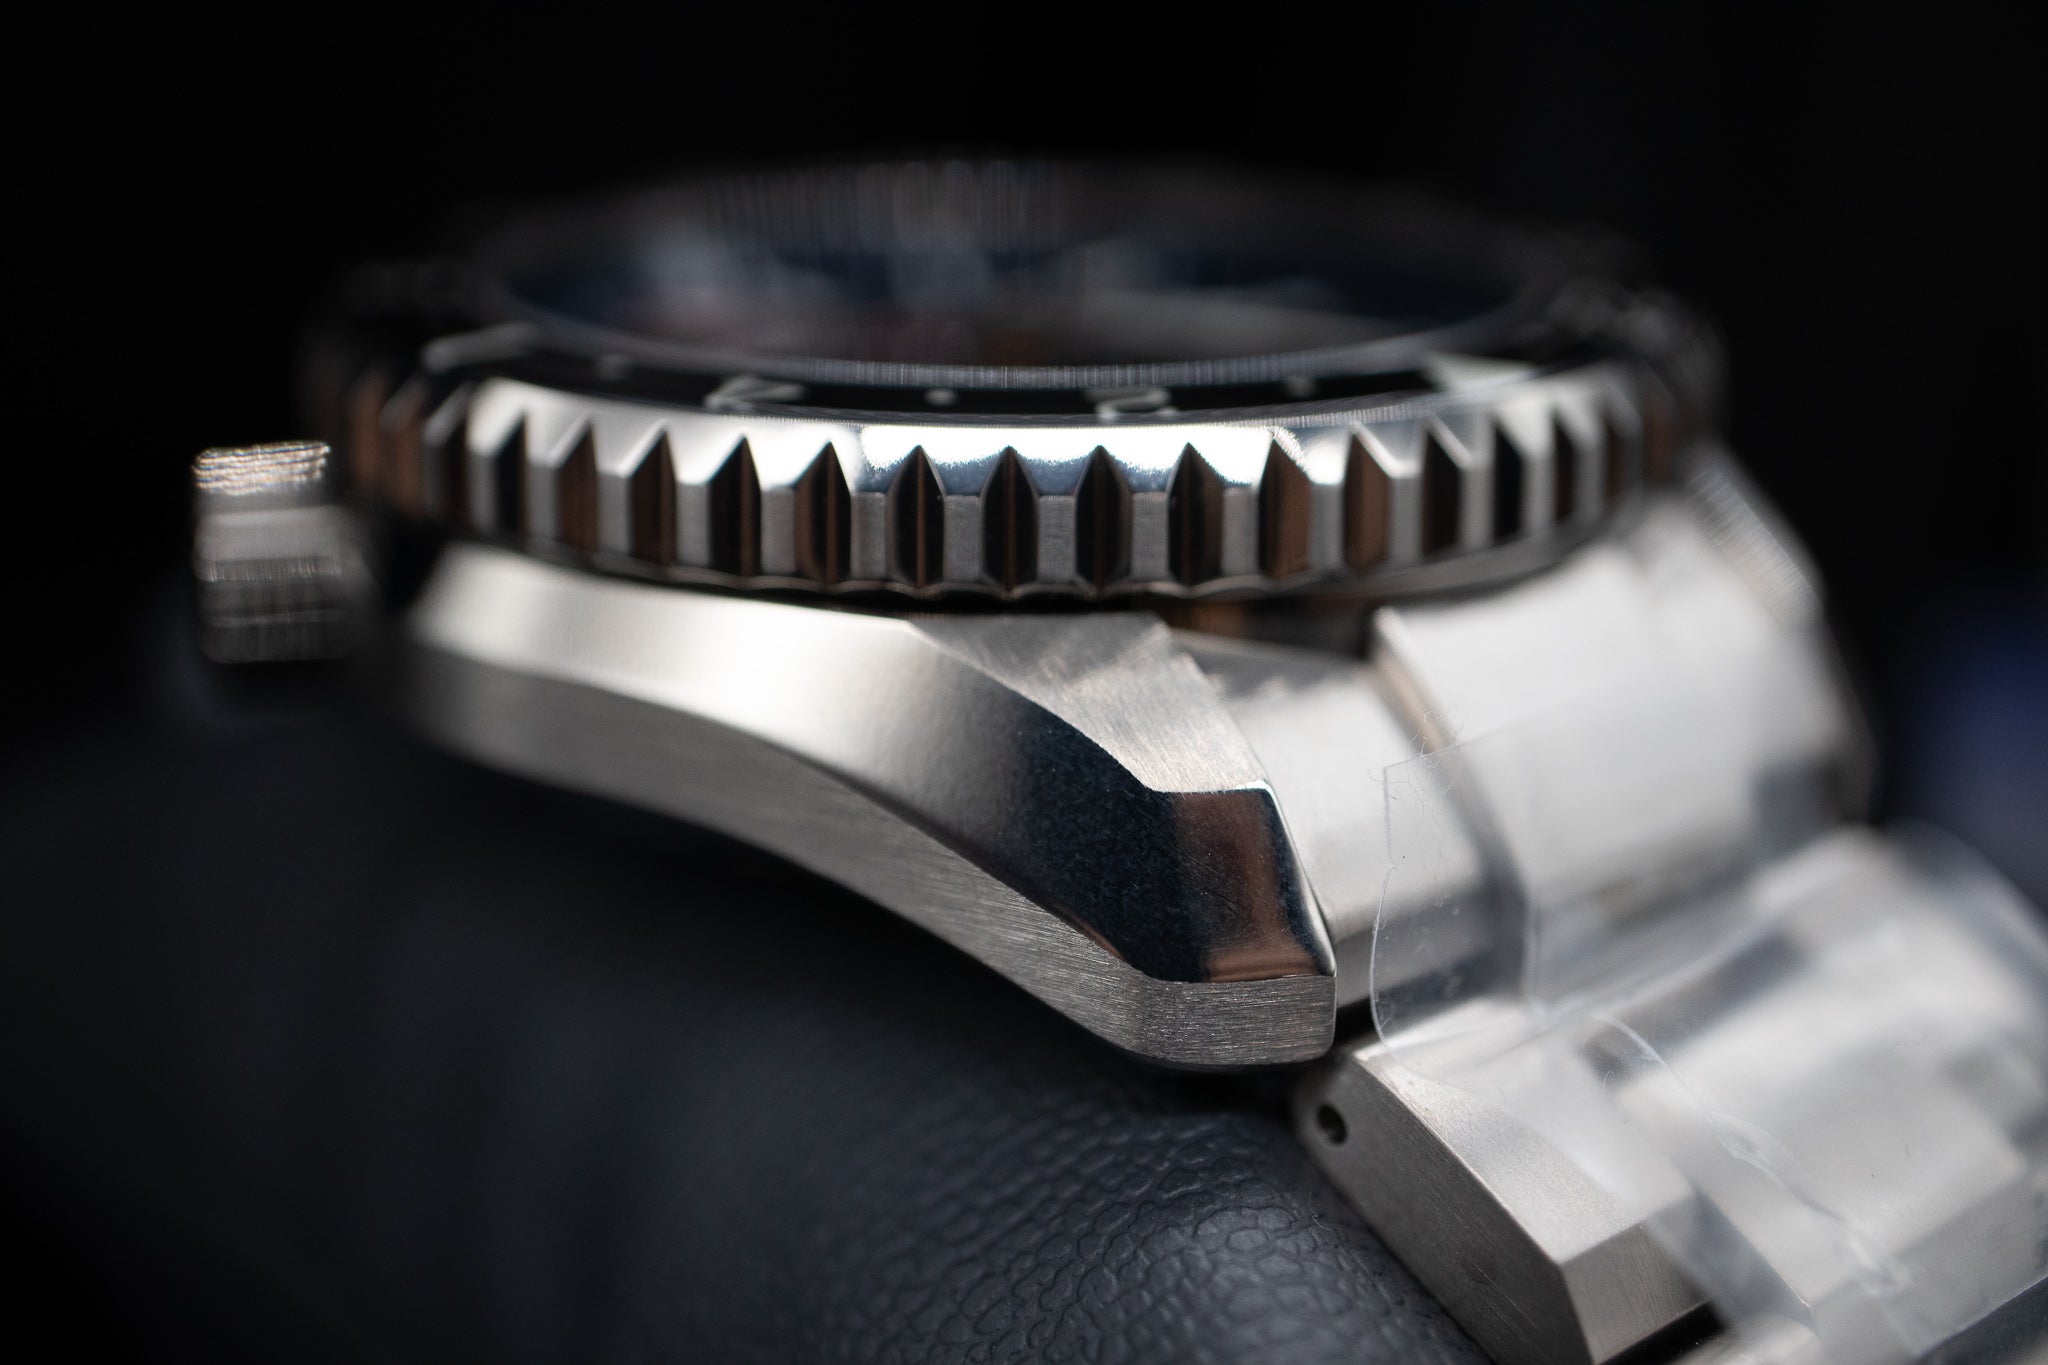 Seiko Prospex LX Spring Drive GMT Titanium Bracelet Men's Automatic Wa –  Belmont Watches